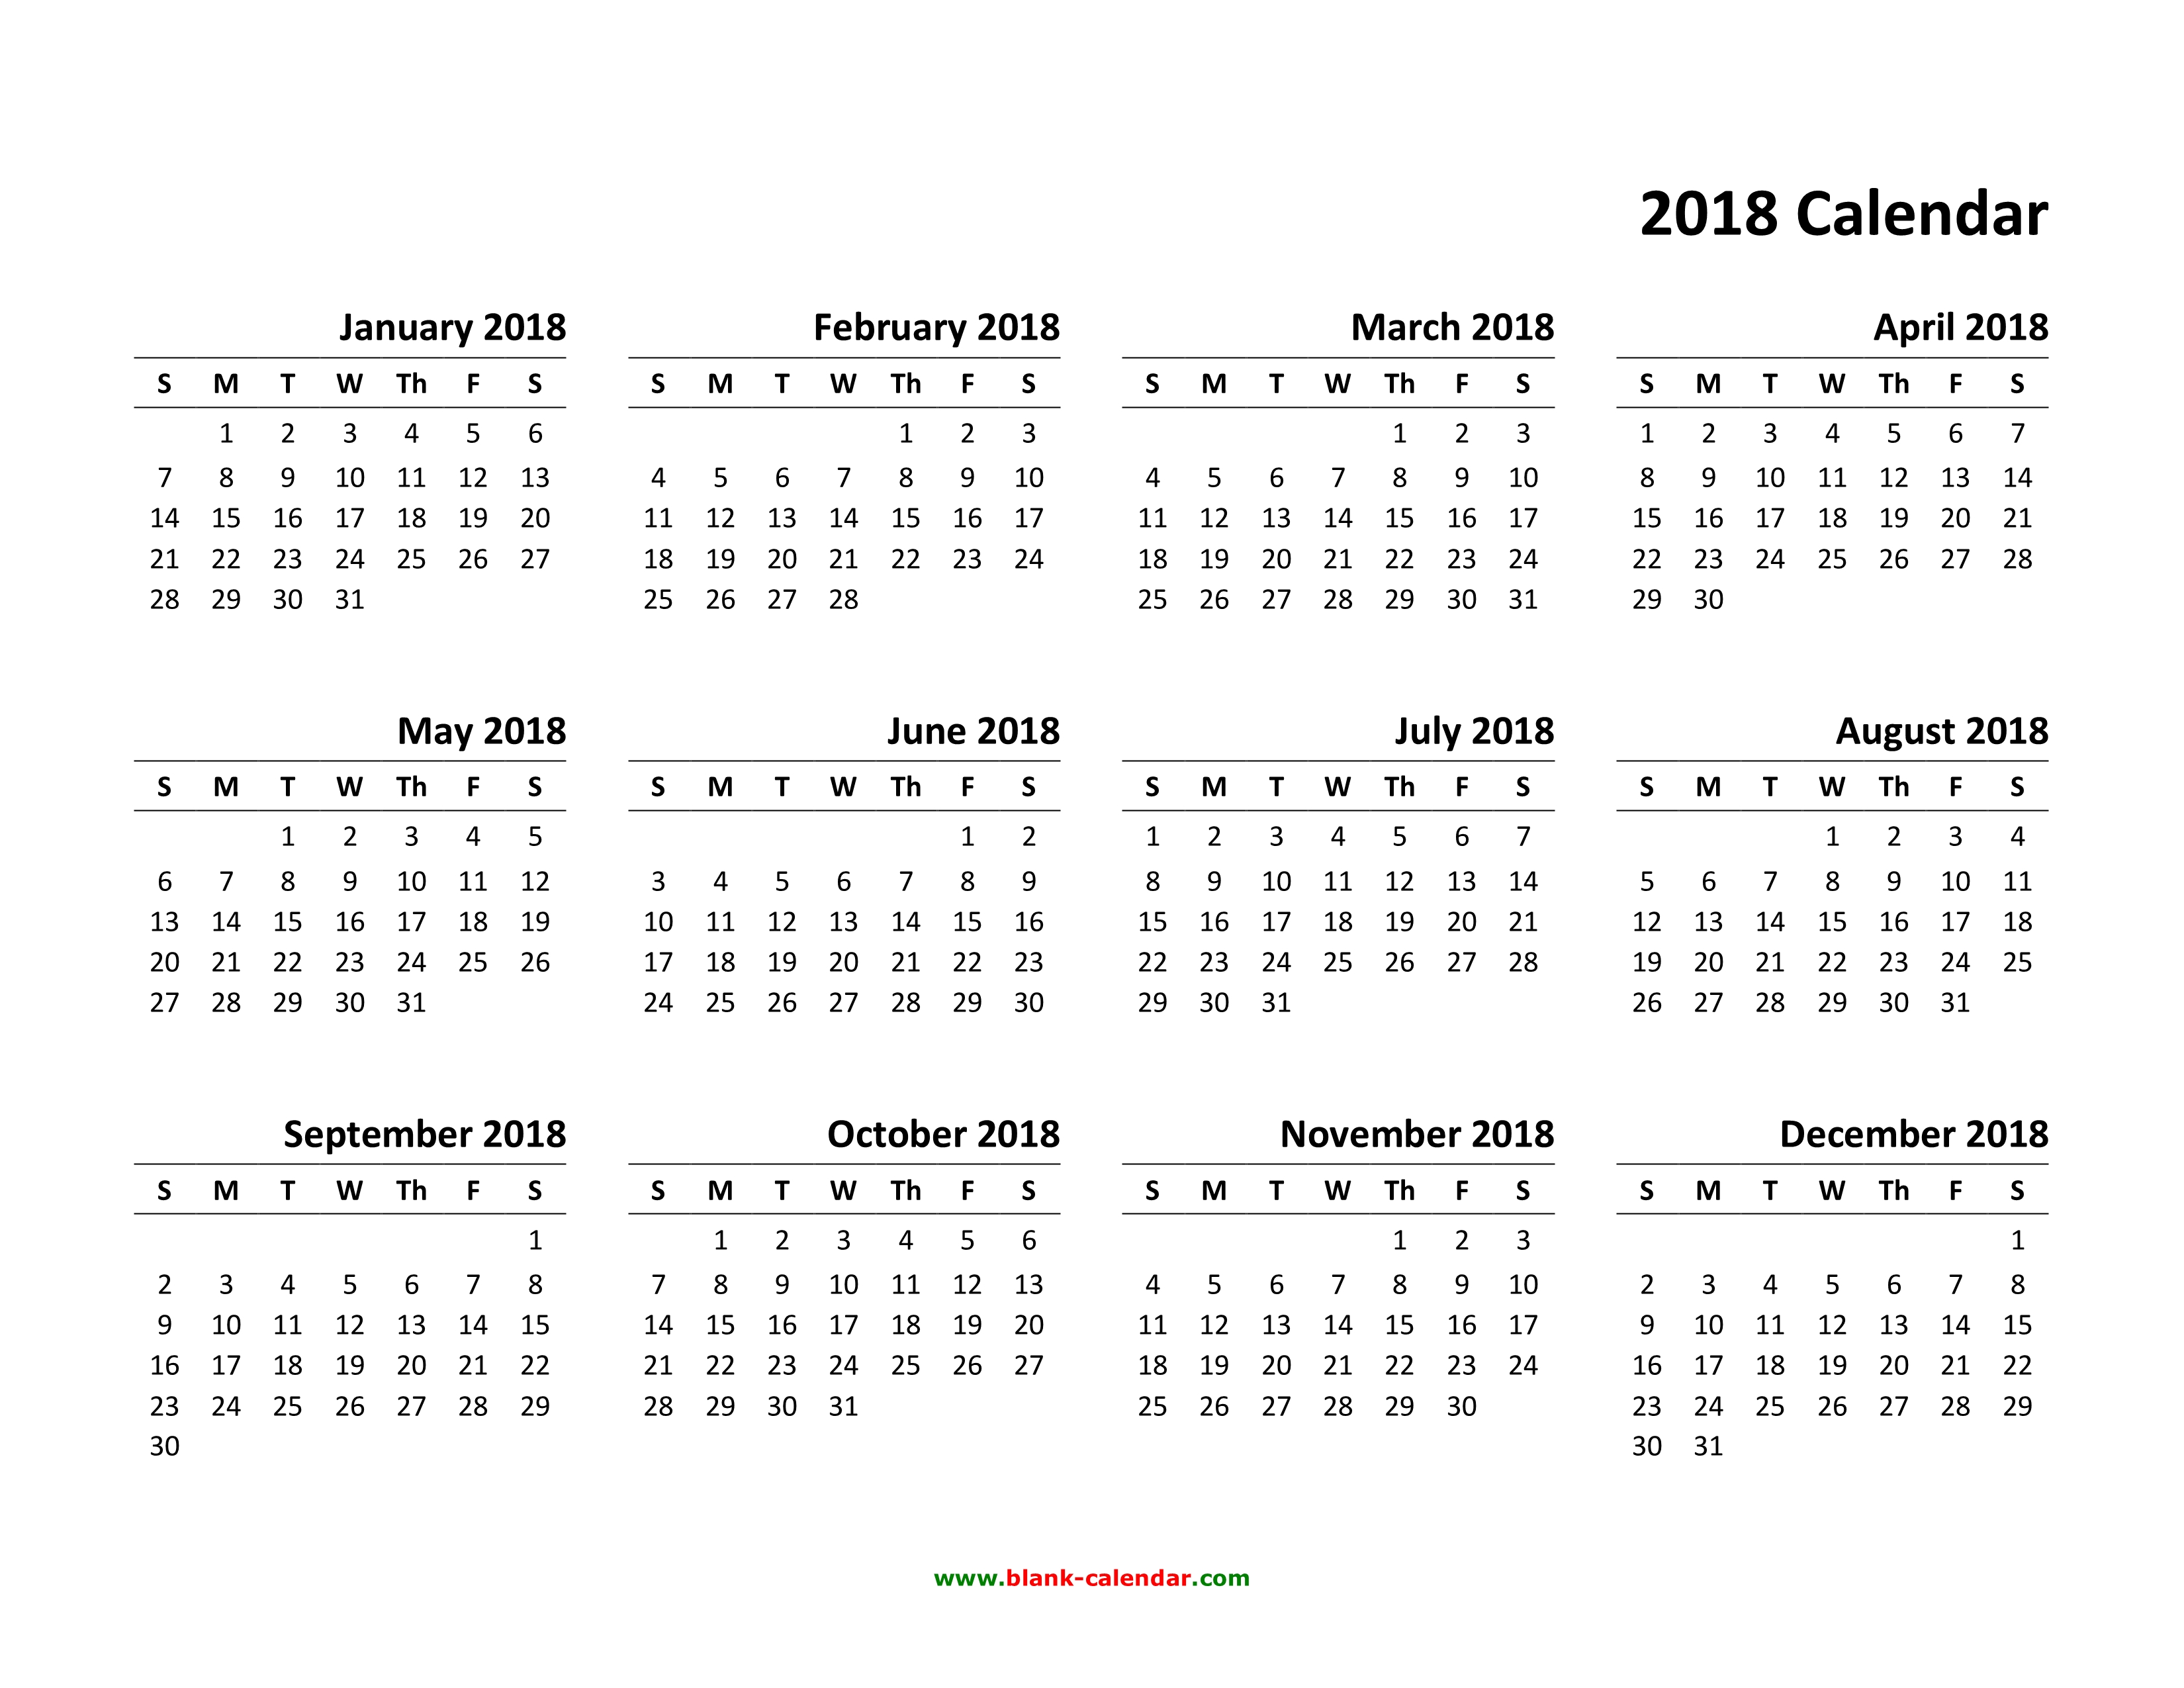 printable-october-2018-calendar-towncalendars